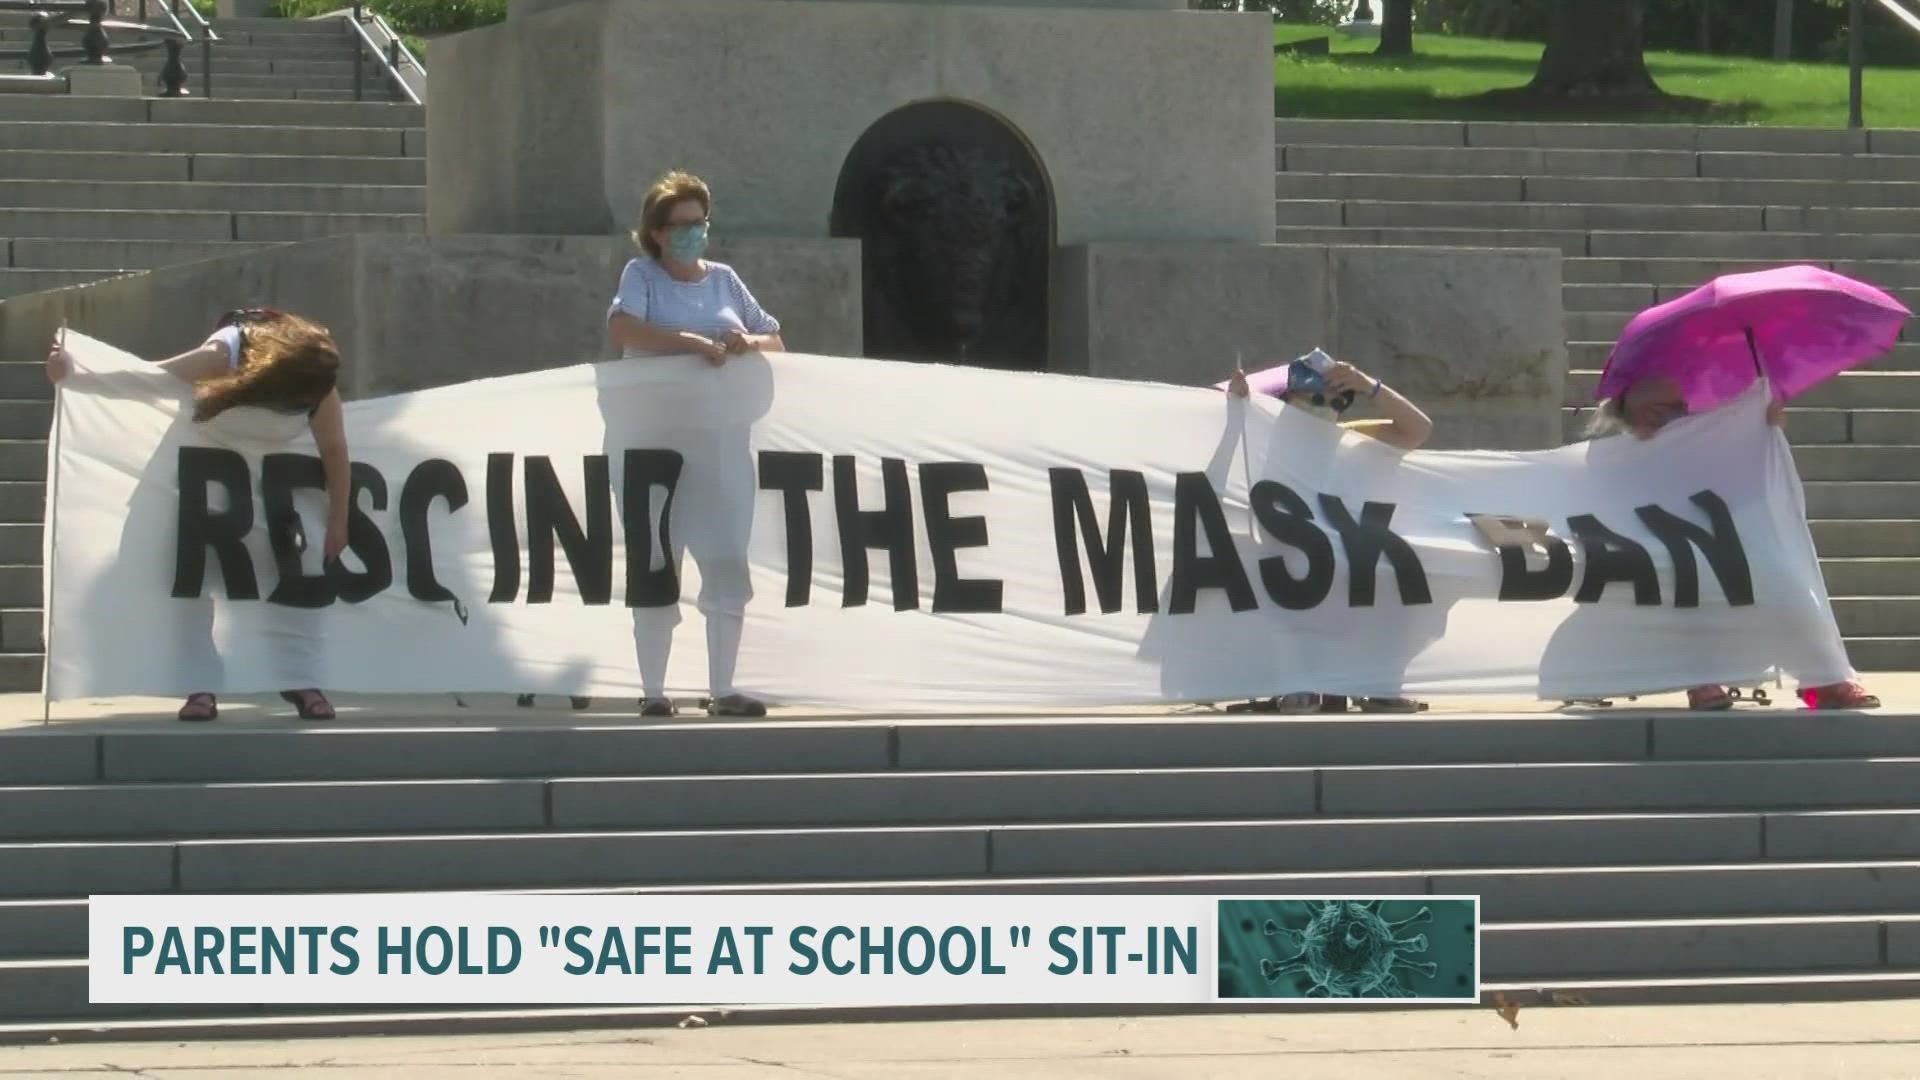 Under current Iowa law, mask mandates in schools are illegal.